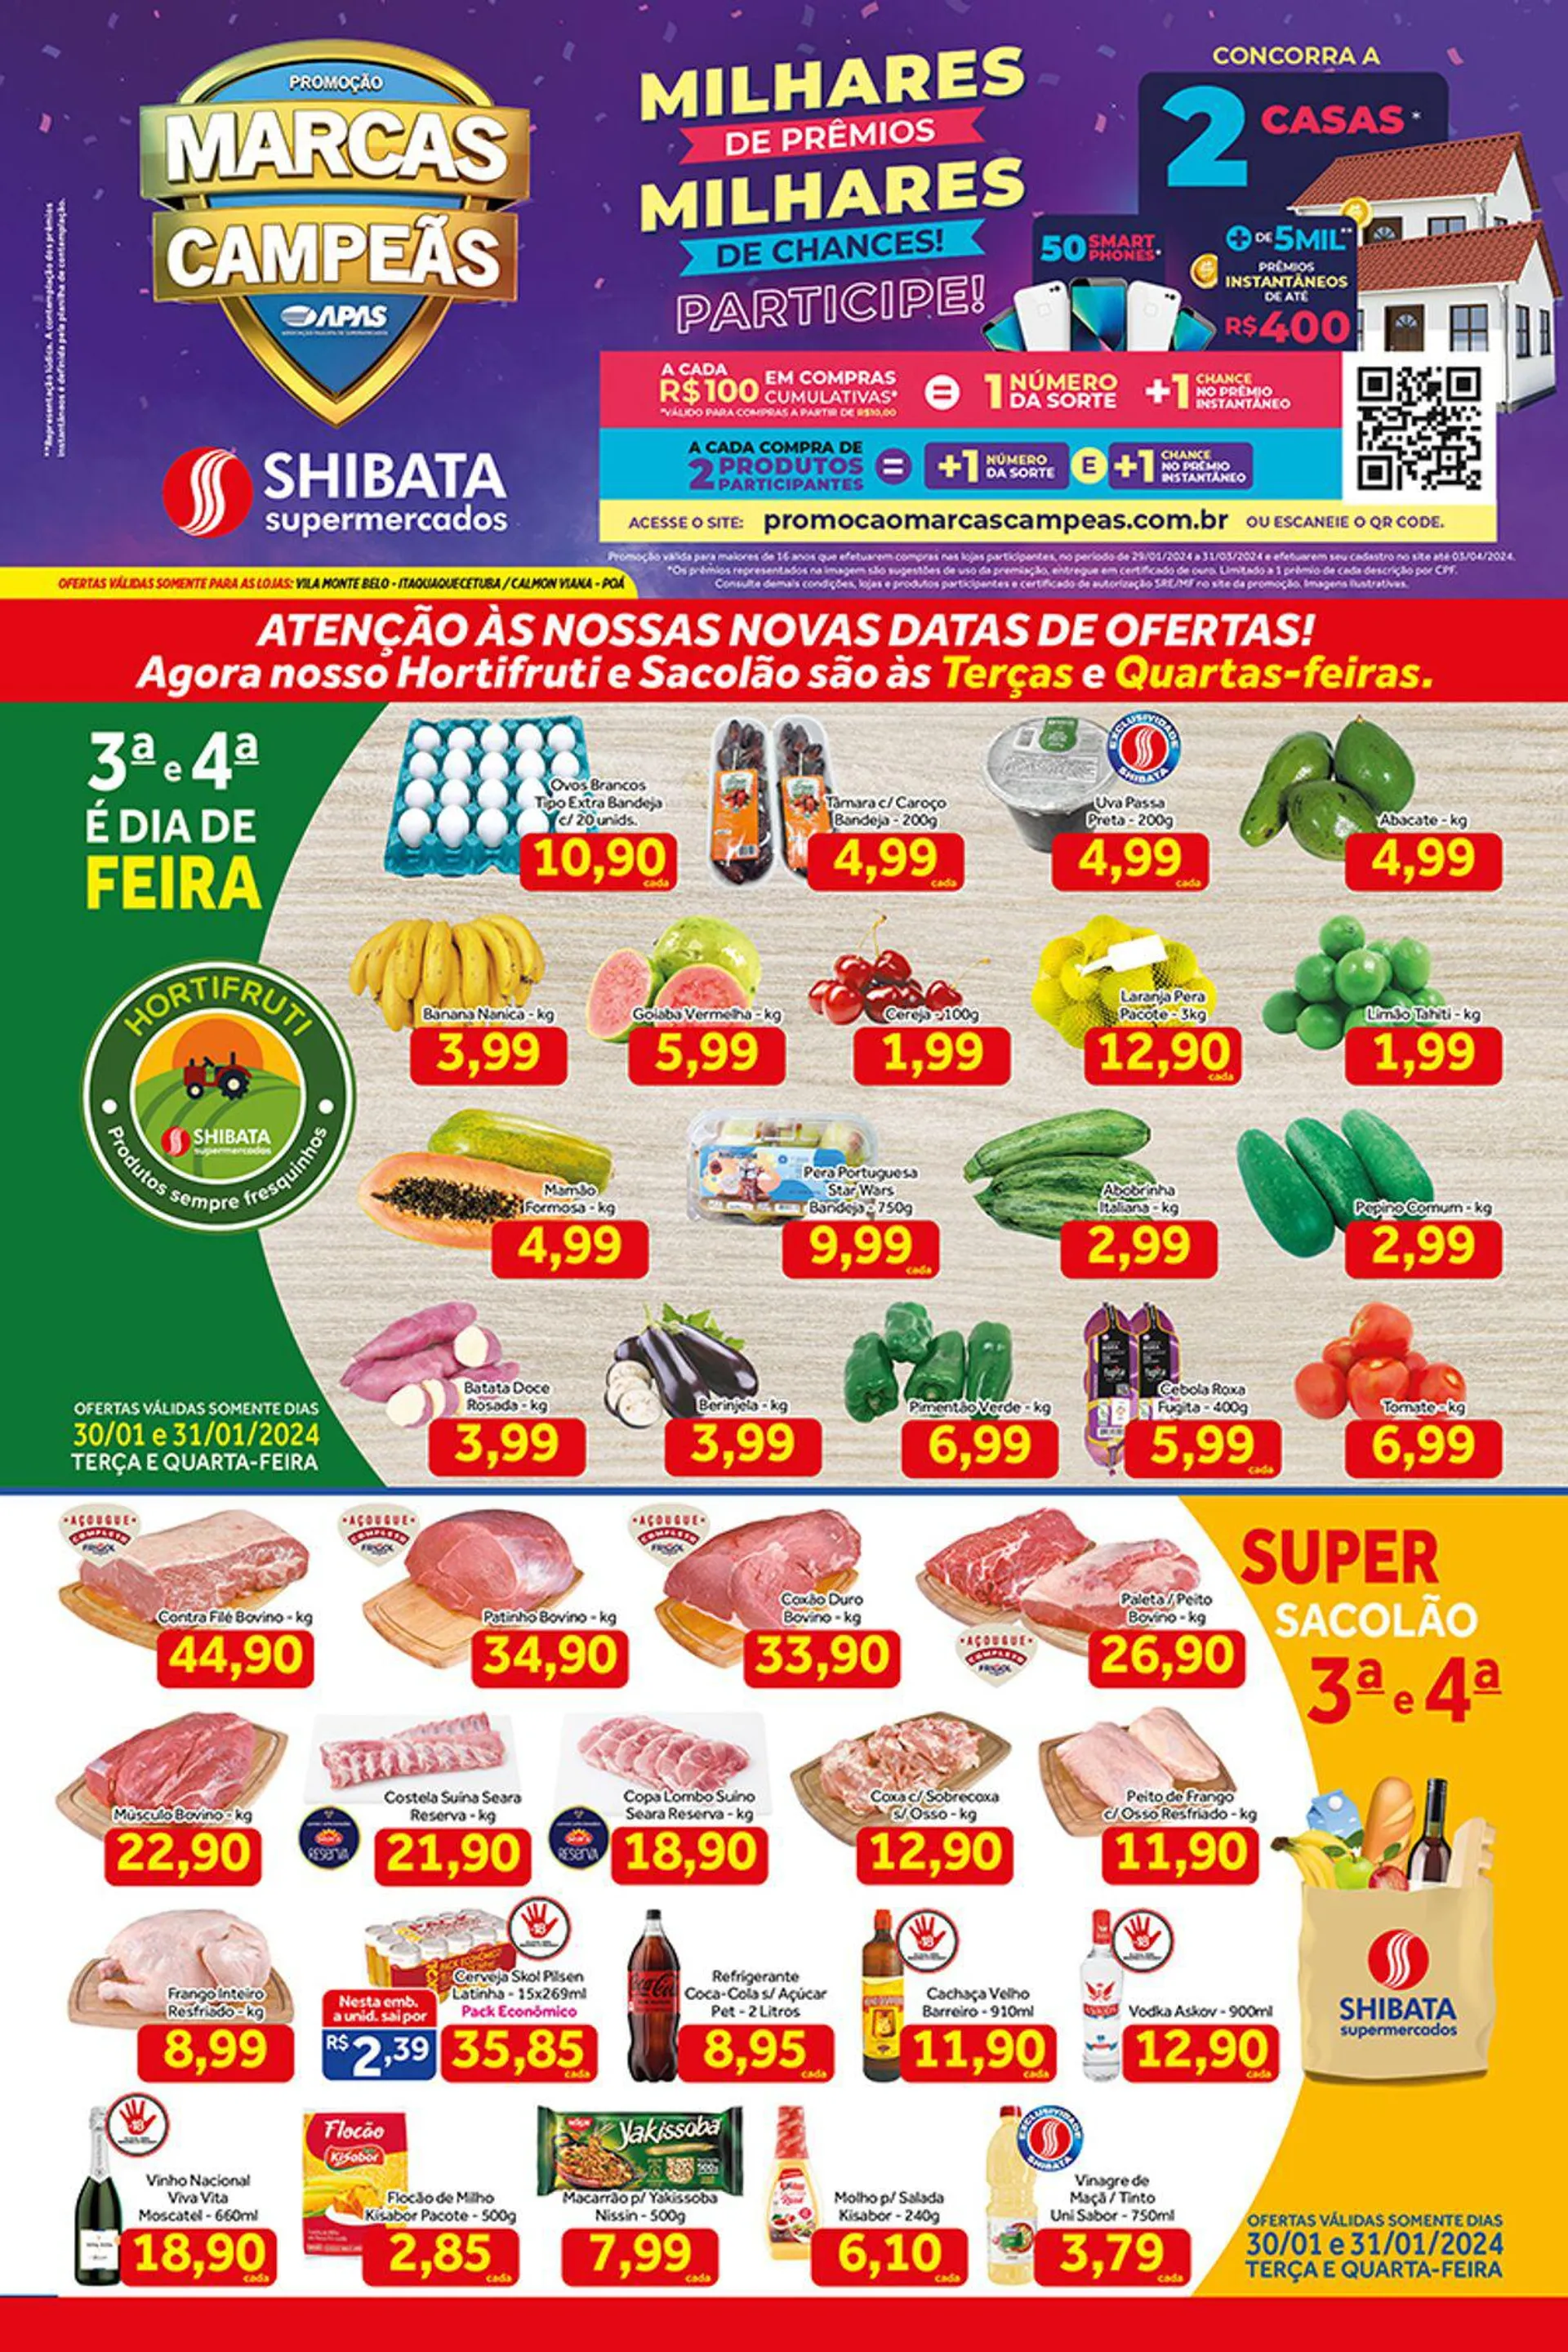 Encarte de Shibata Supermercados - Itaqua e Poá 1 de maio até 2 de dezembro 2024 - Pagina 